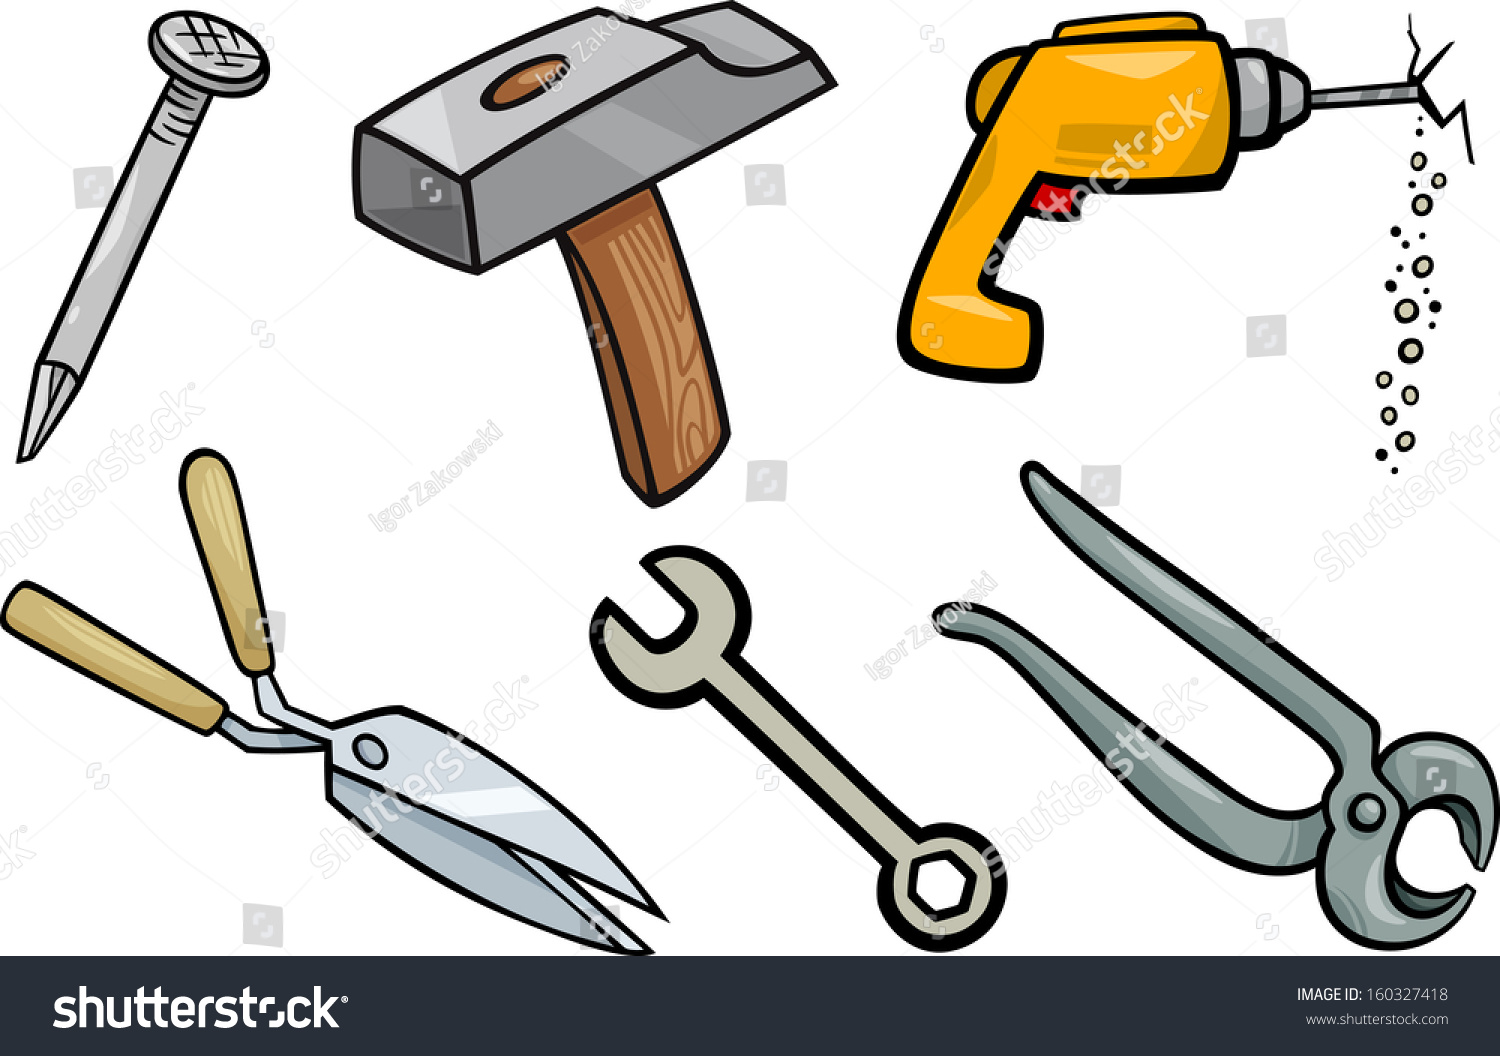 free clipart carpenter tools - photo #43